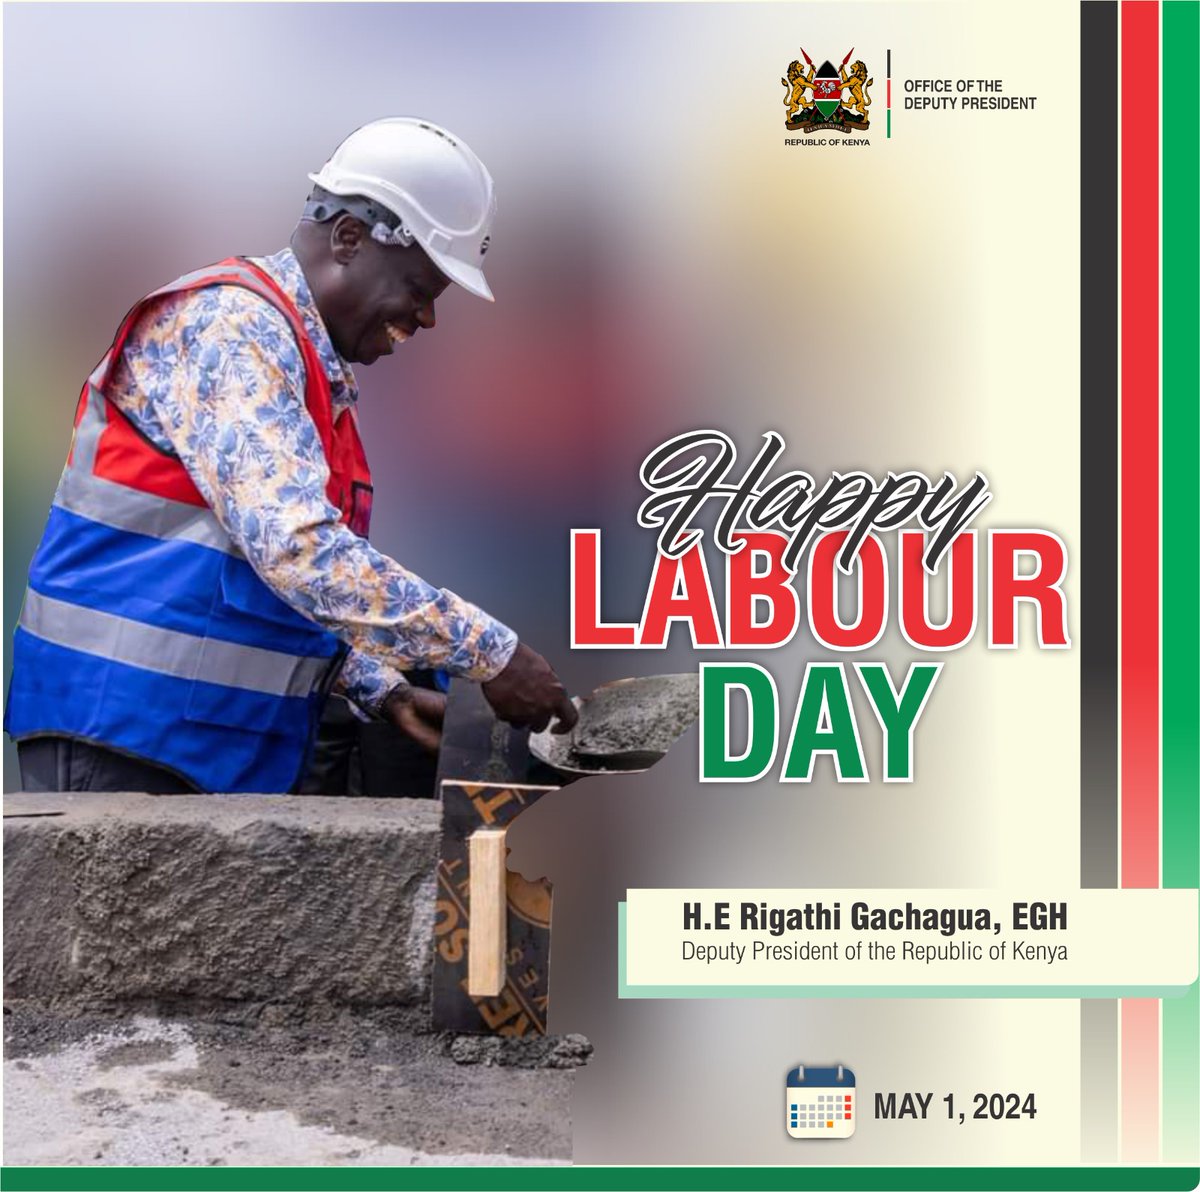 Happy Labour Day, Kenya.